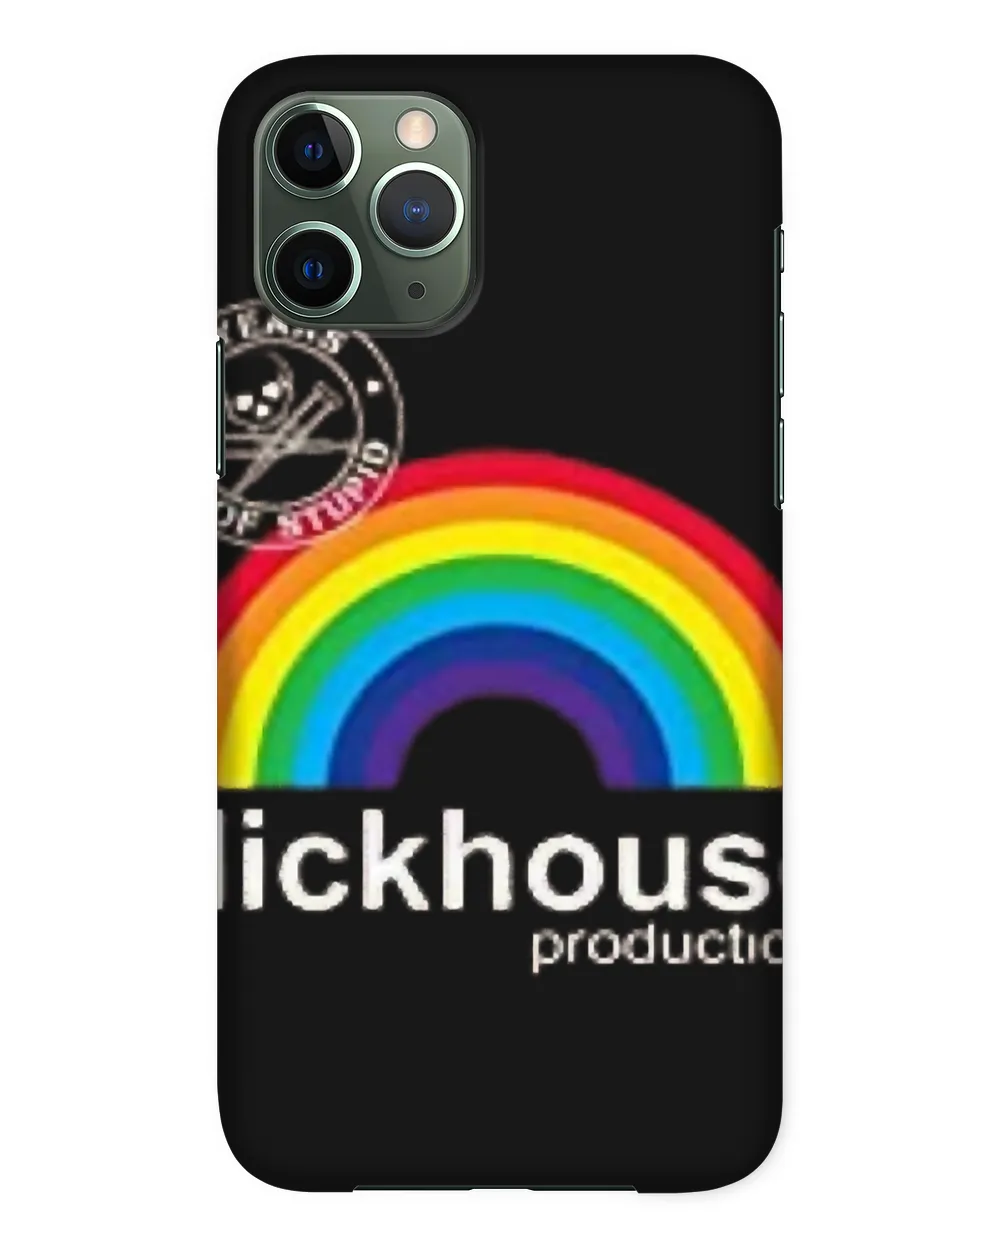 Dickhouse Productions - Dickhouse Jackass Logo Crew Neck Essential T-Shirt